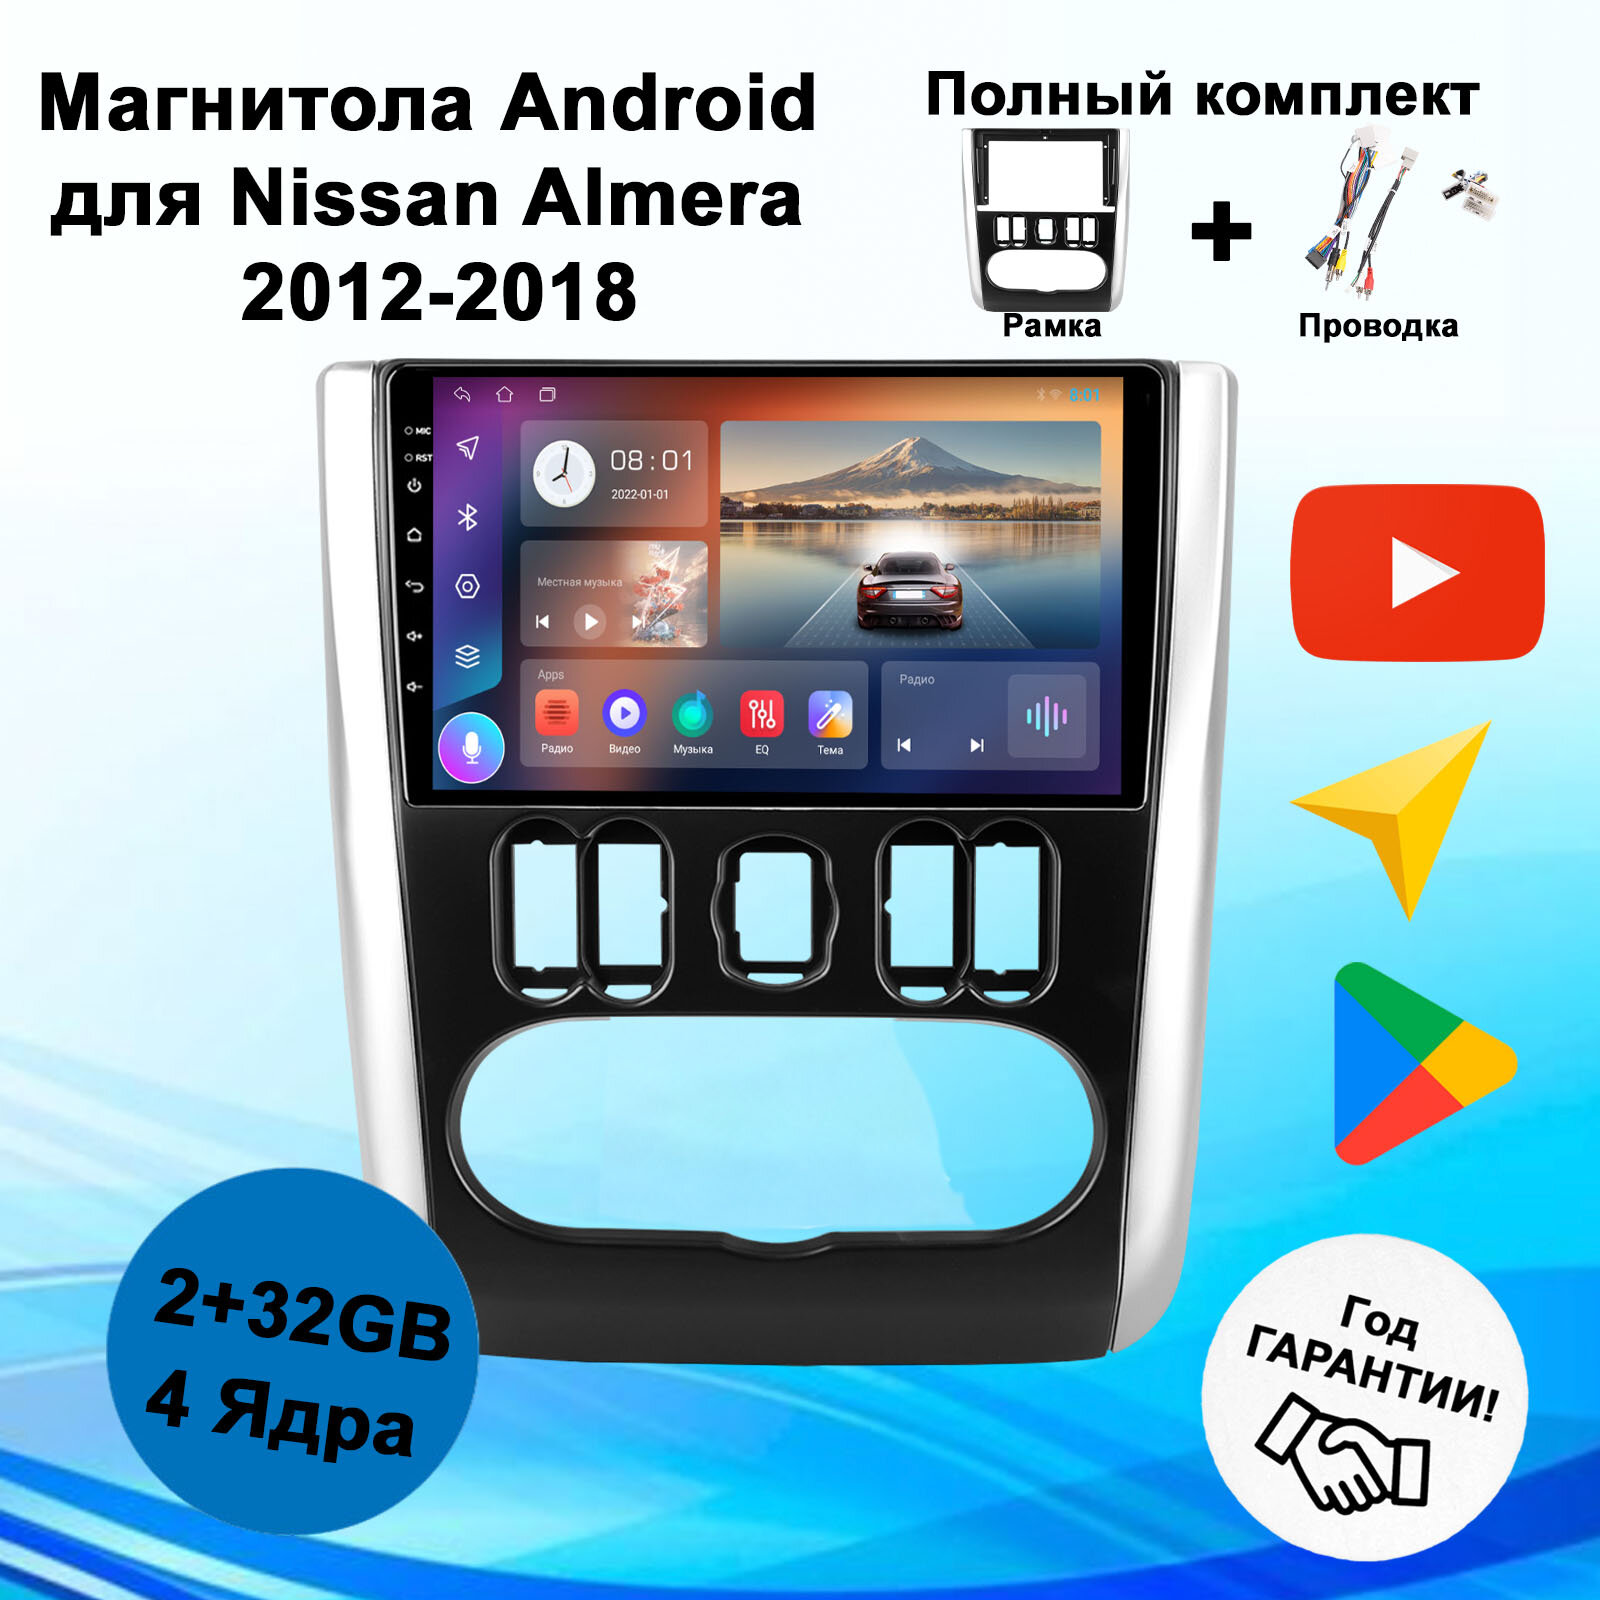 Магнитола Андроид для Nissan Almera G15 2012-2018 2+32Gb (Android/Wi-FI/Bluetooh/2DIN/Штатная магнитола/Головное устройство/Автомагнитола